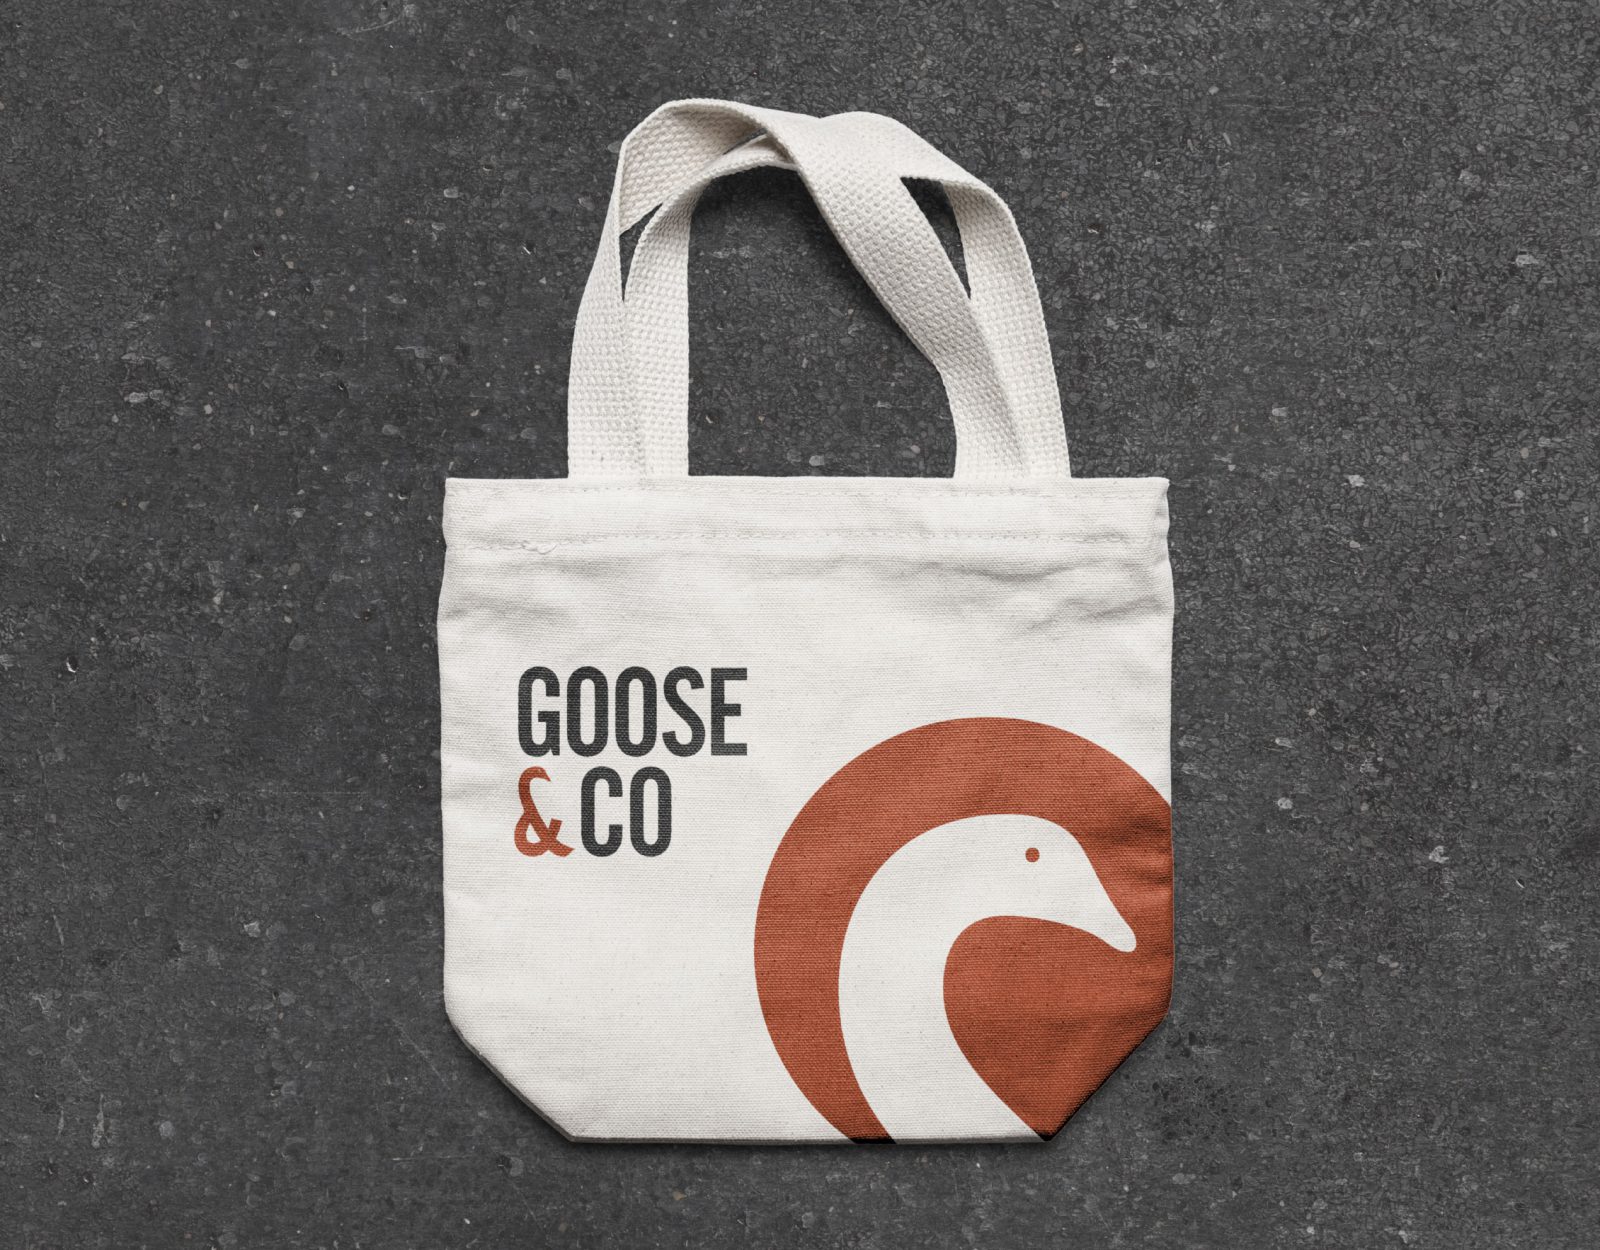 Goose & Co bag